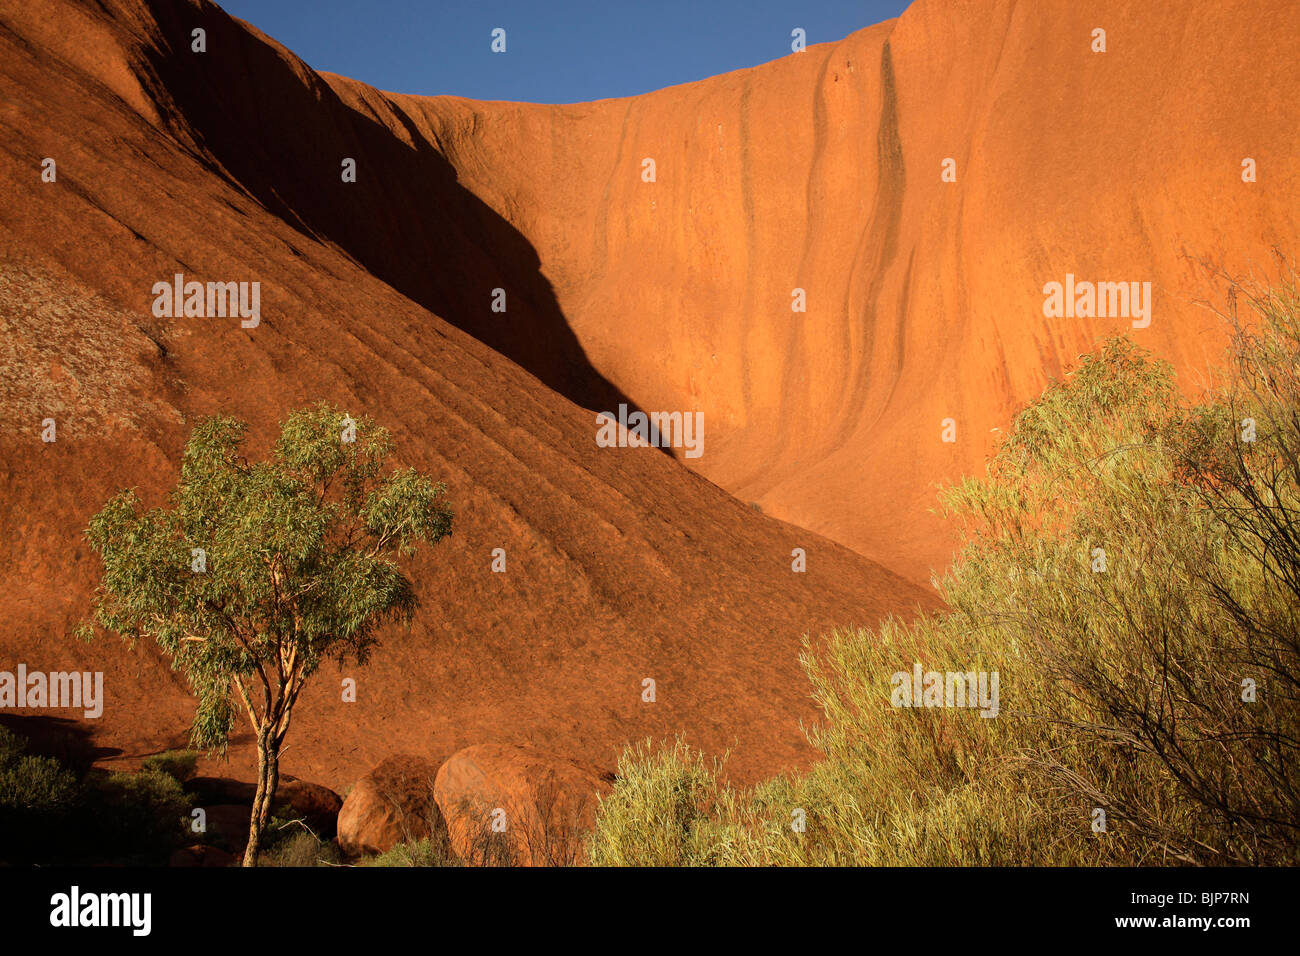 world-renowned sandstone formation Uluru or Ayers Rock , Northern Territory, Australia Stock Photo